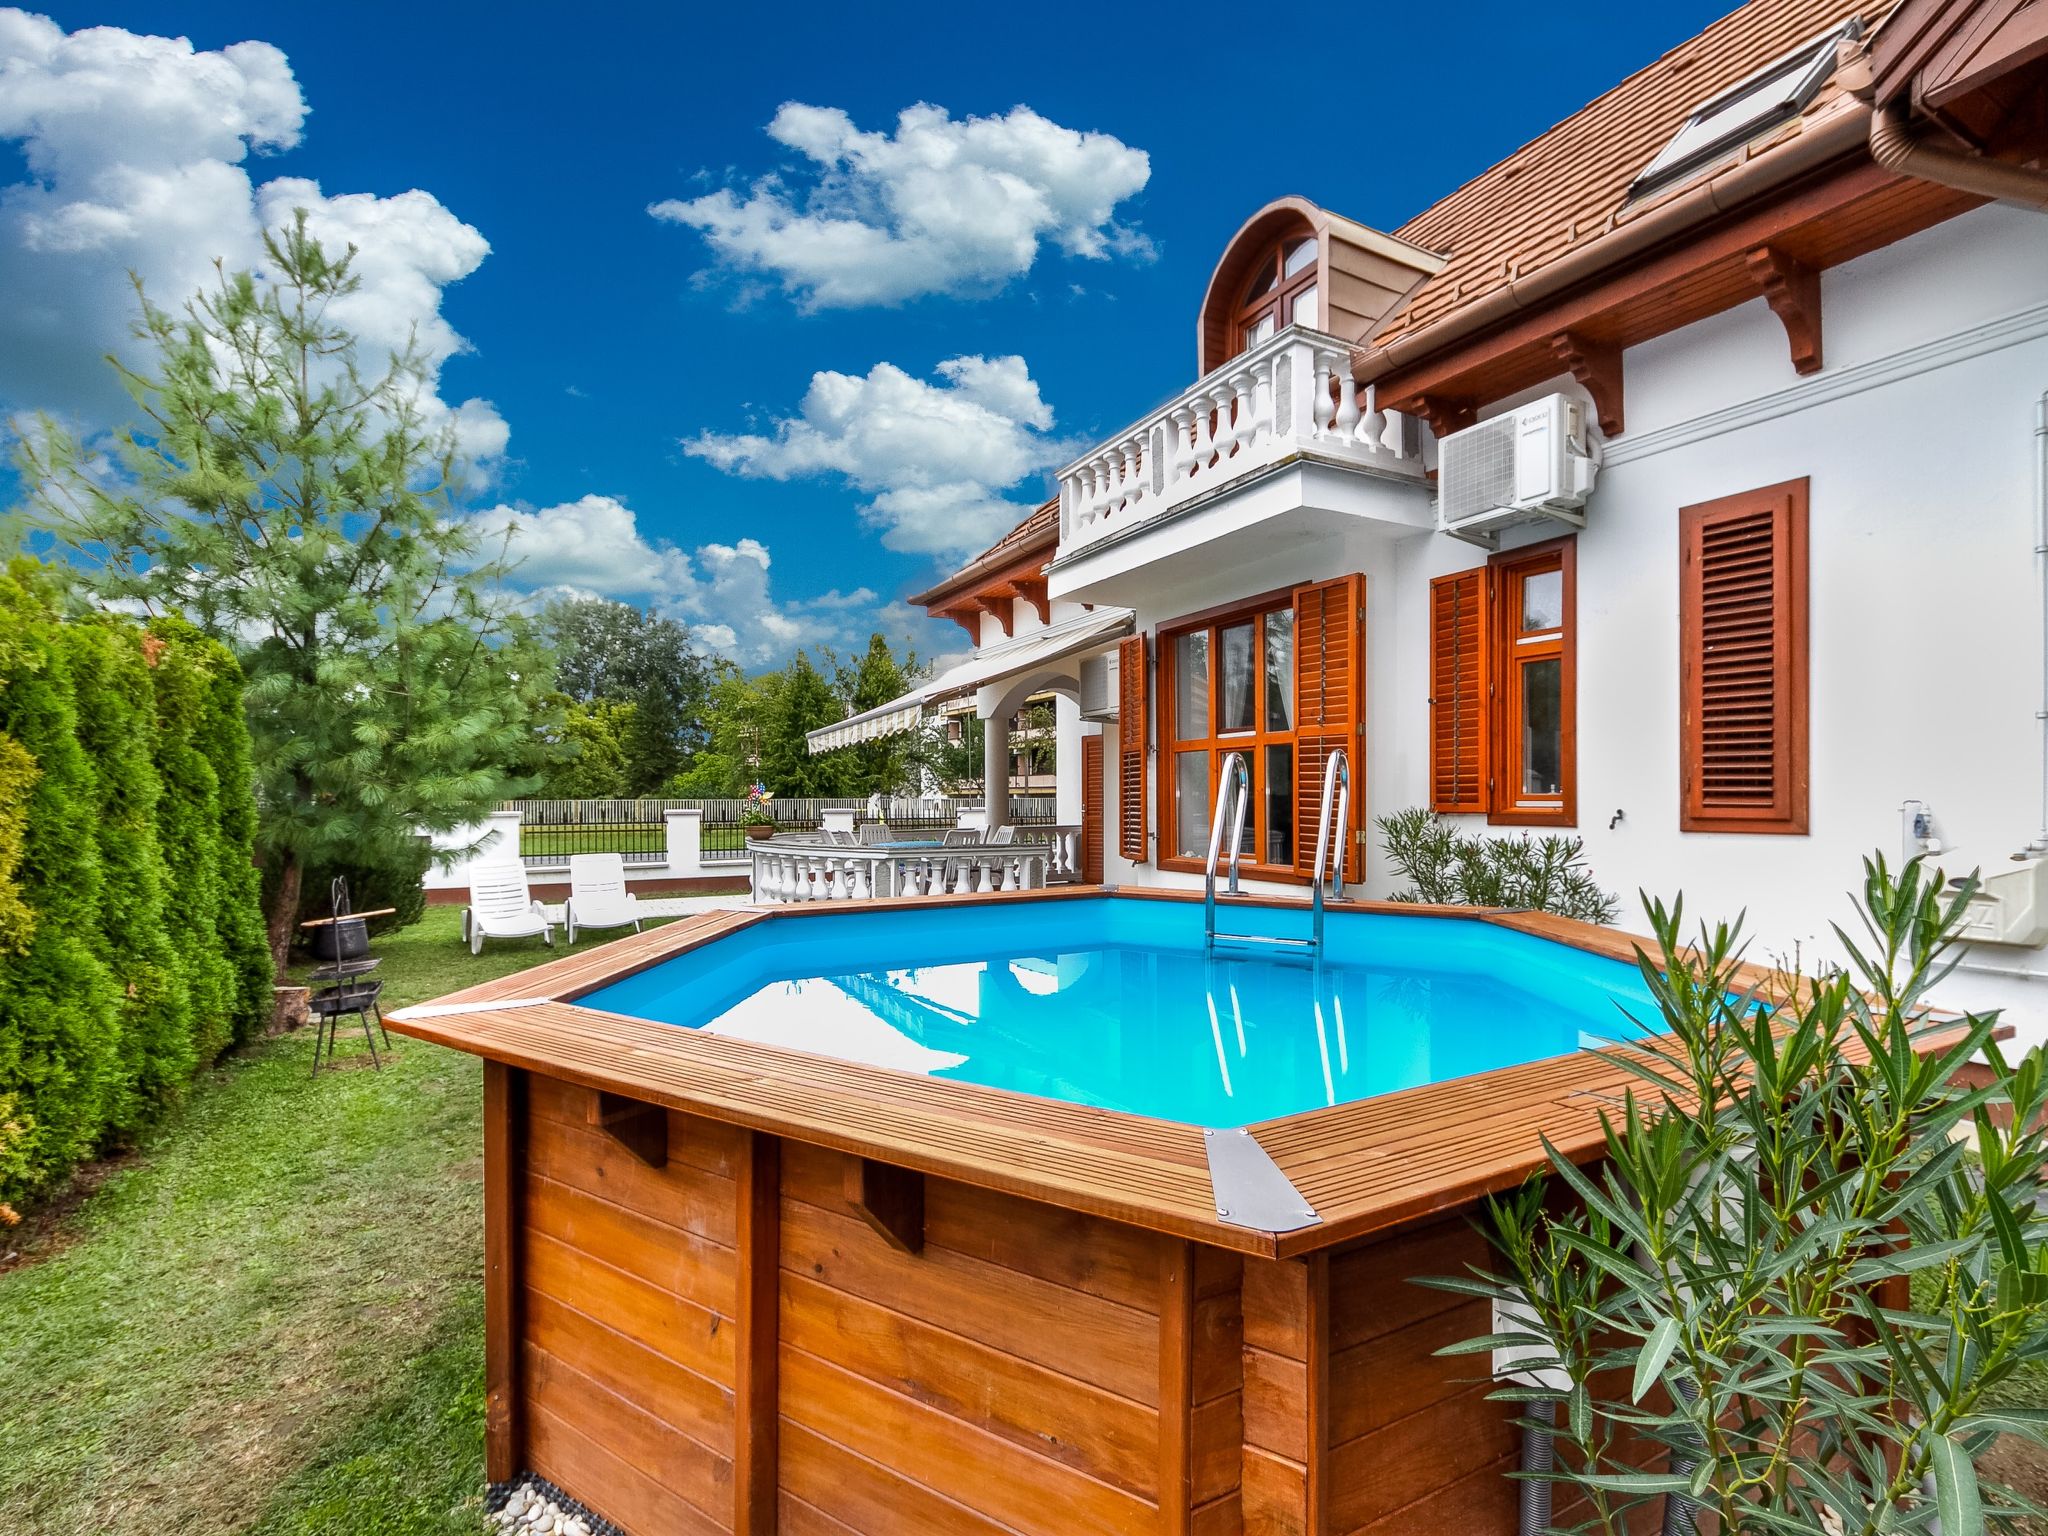 Foto 1 - Casa con 4 camere da letto a Balatonberény con piscina privata e giardino